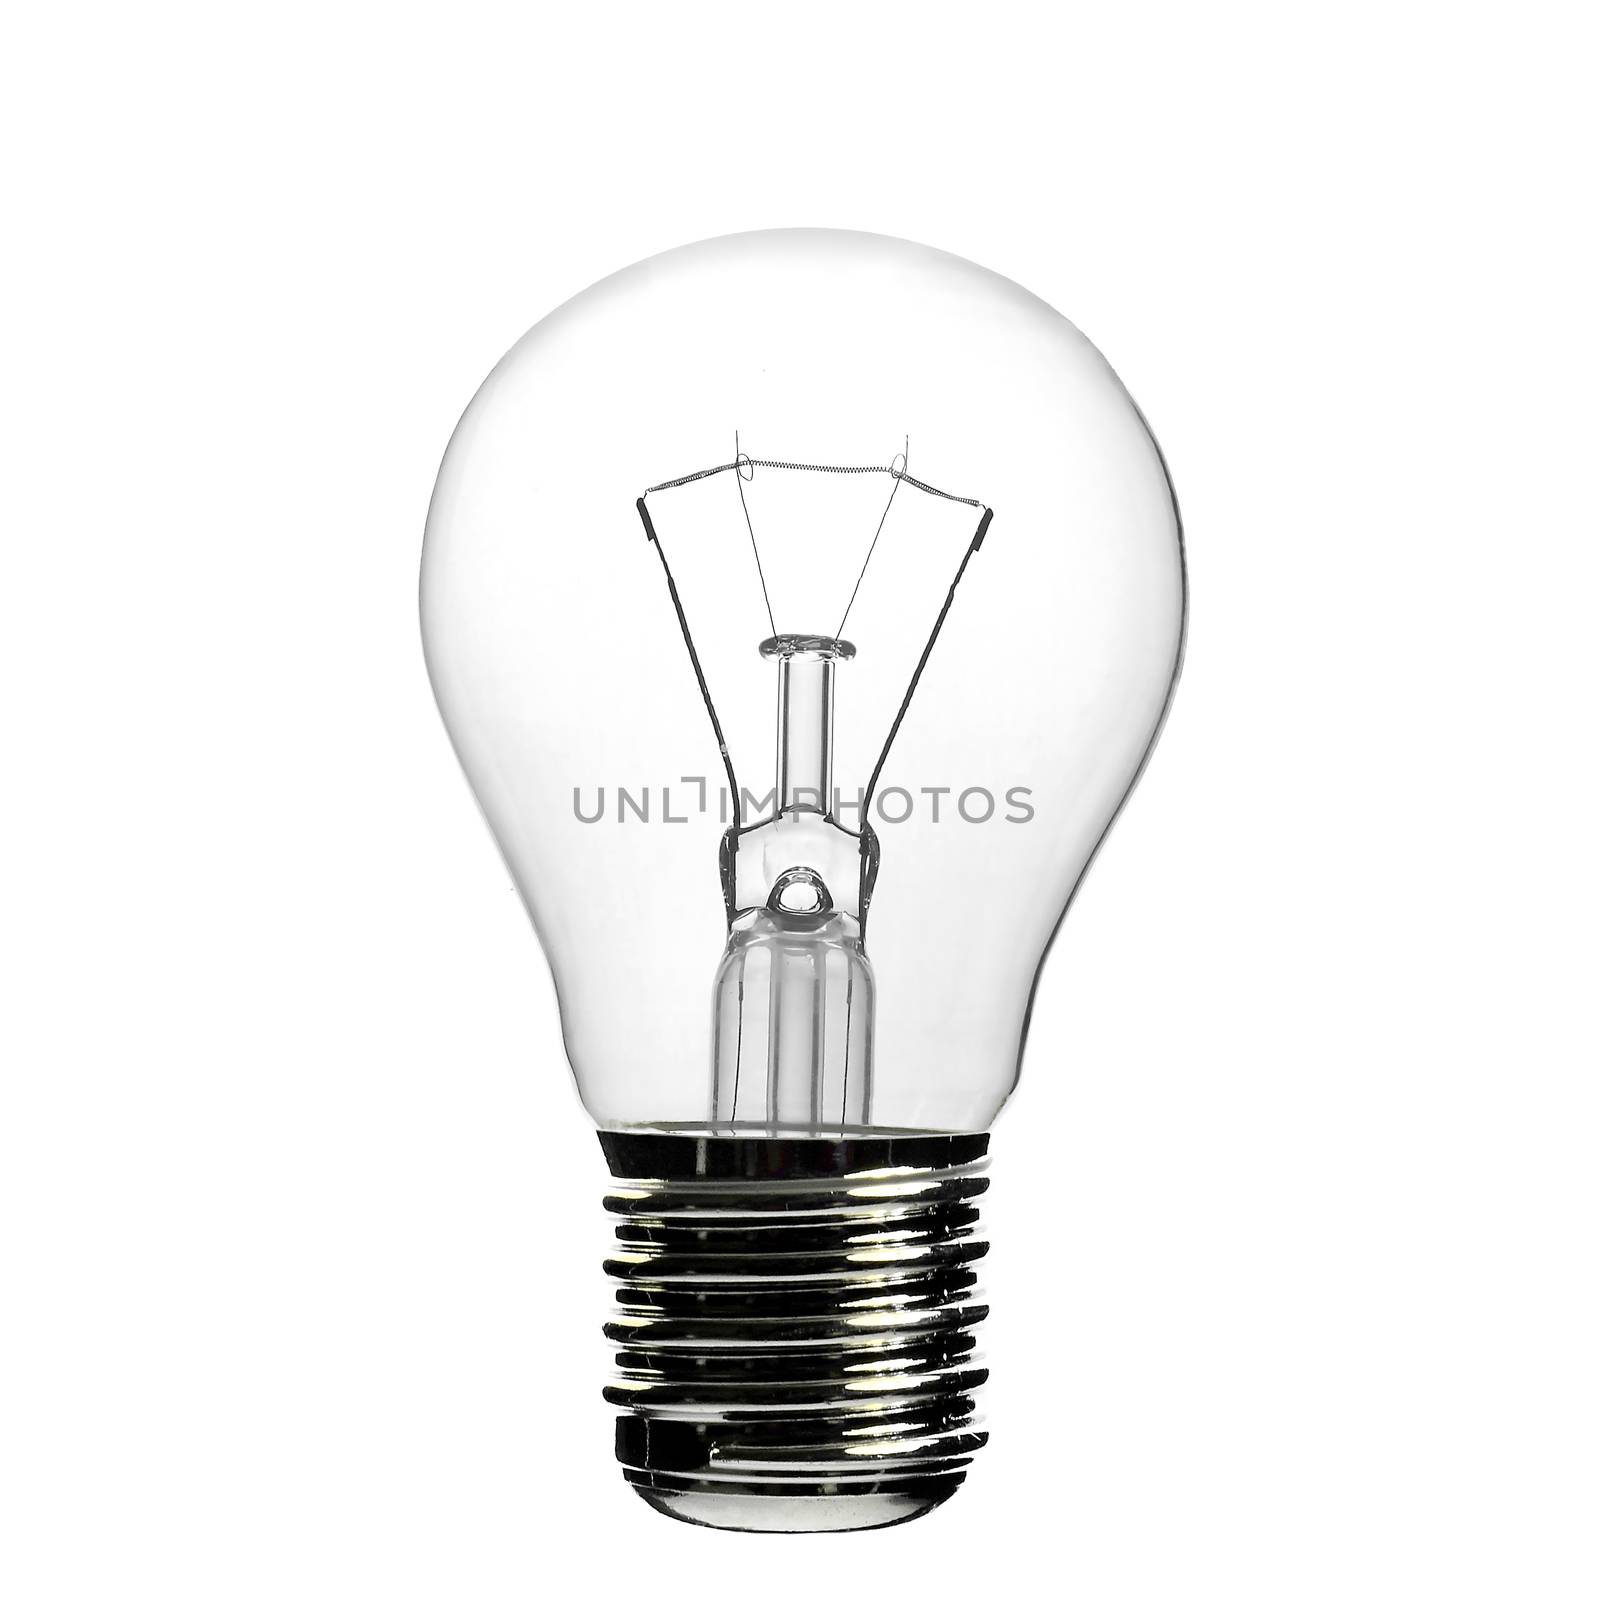 Light bulb by dynamicfoto